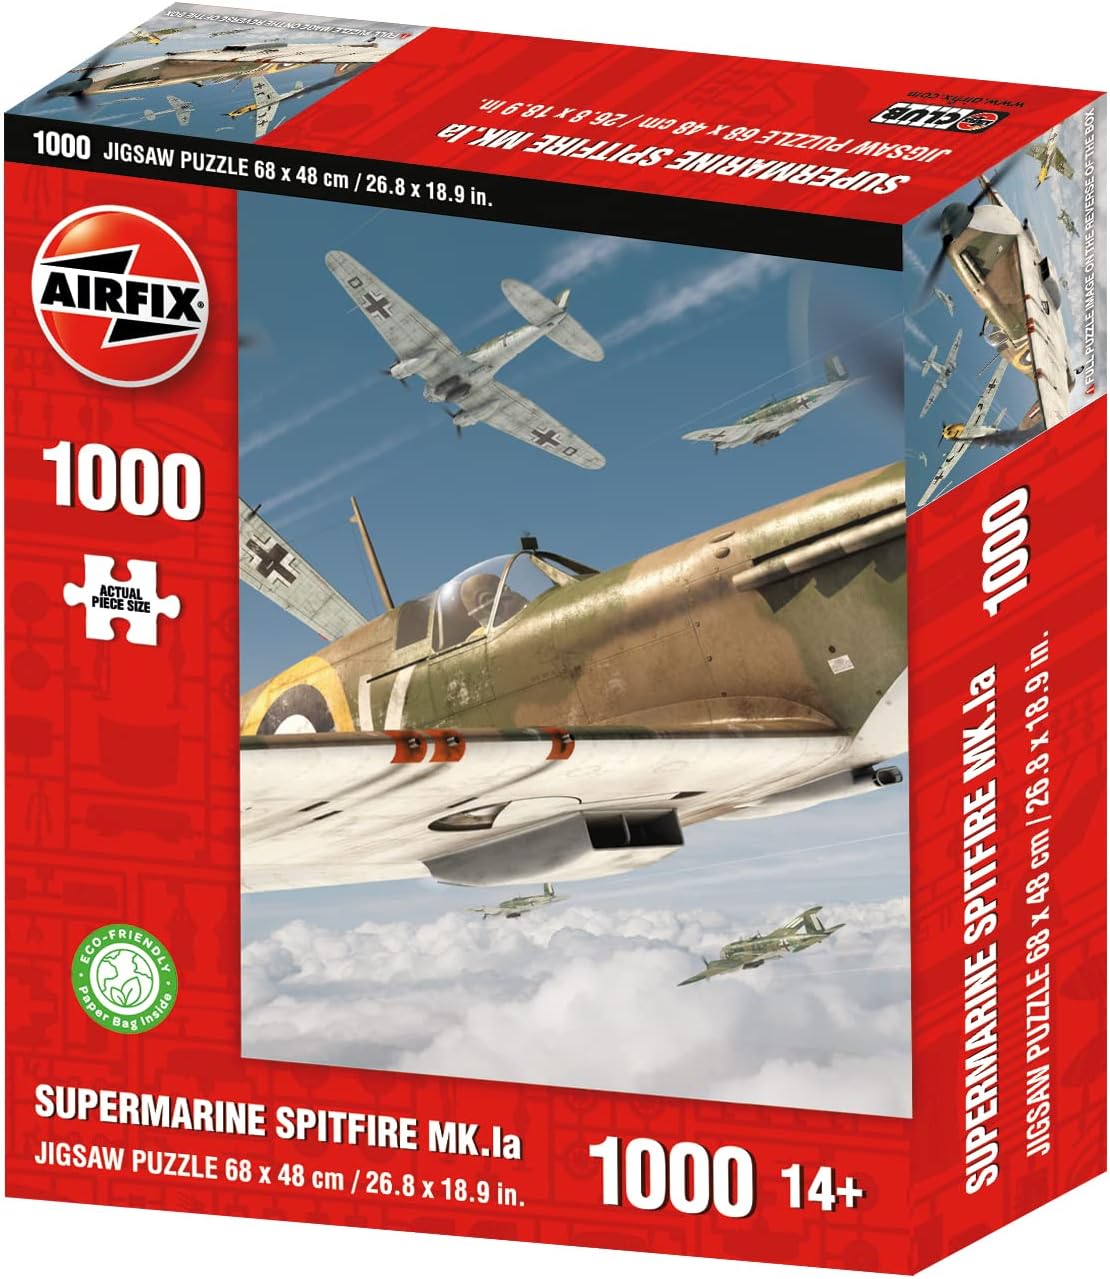 Jigsaw Puzzles 1000 pcs Supermarine Spitfire MK.la Airfix - HVCAX0007